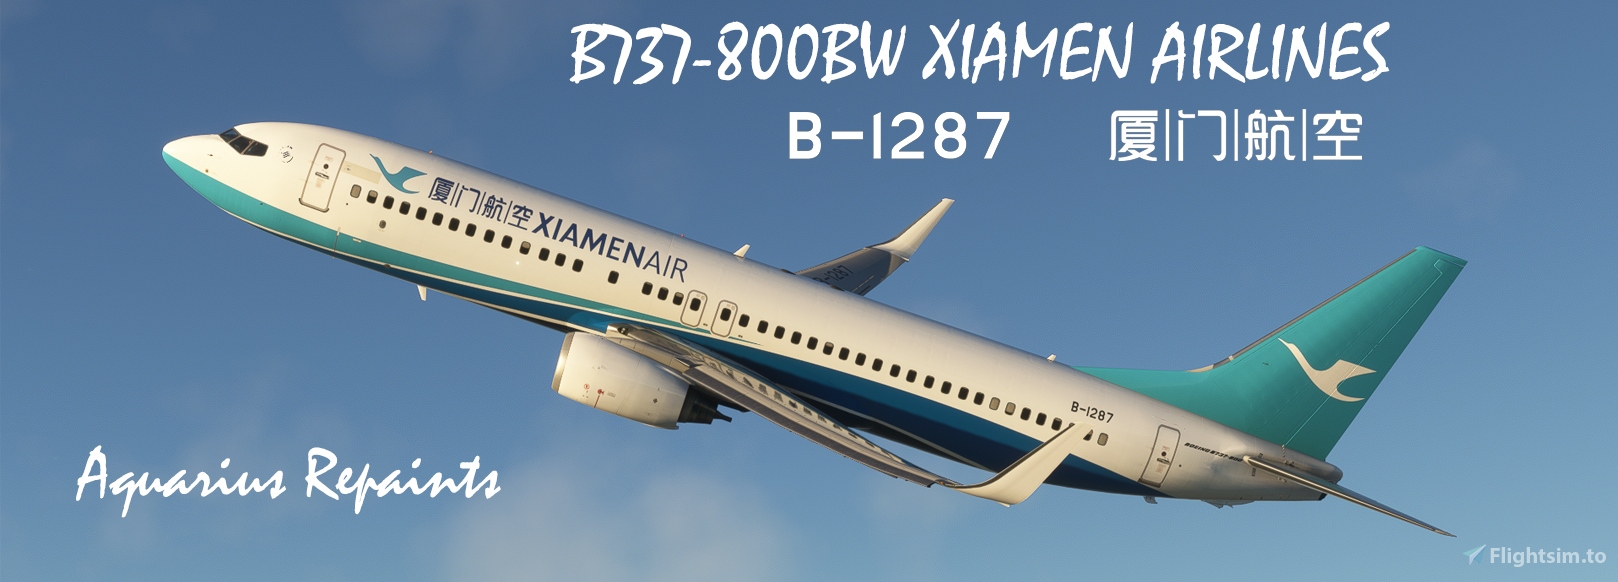 Boeing B737-800BW Xiamen Airlines B-1287 for Microsoft Flight 